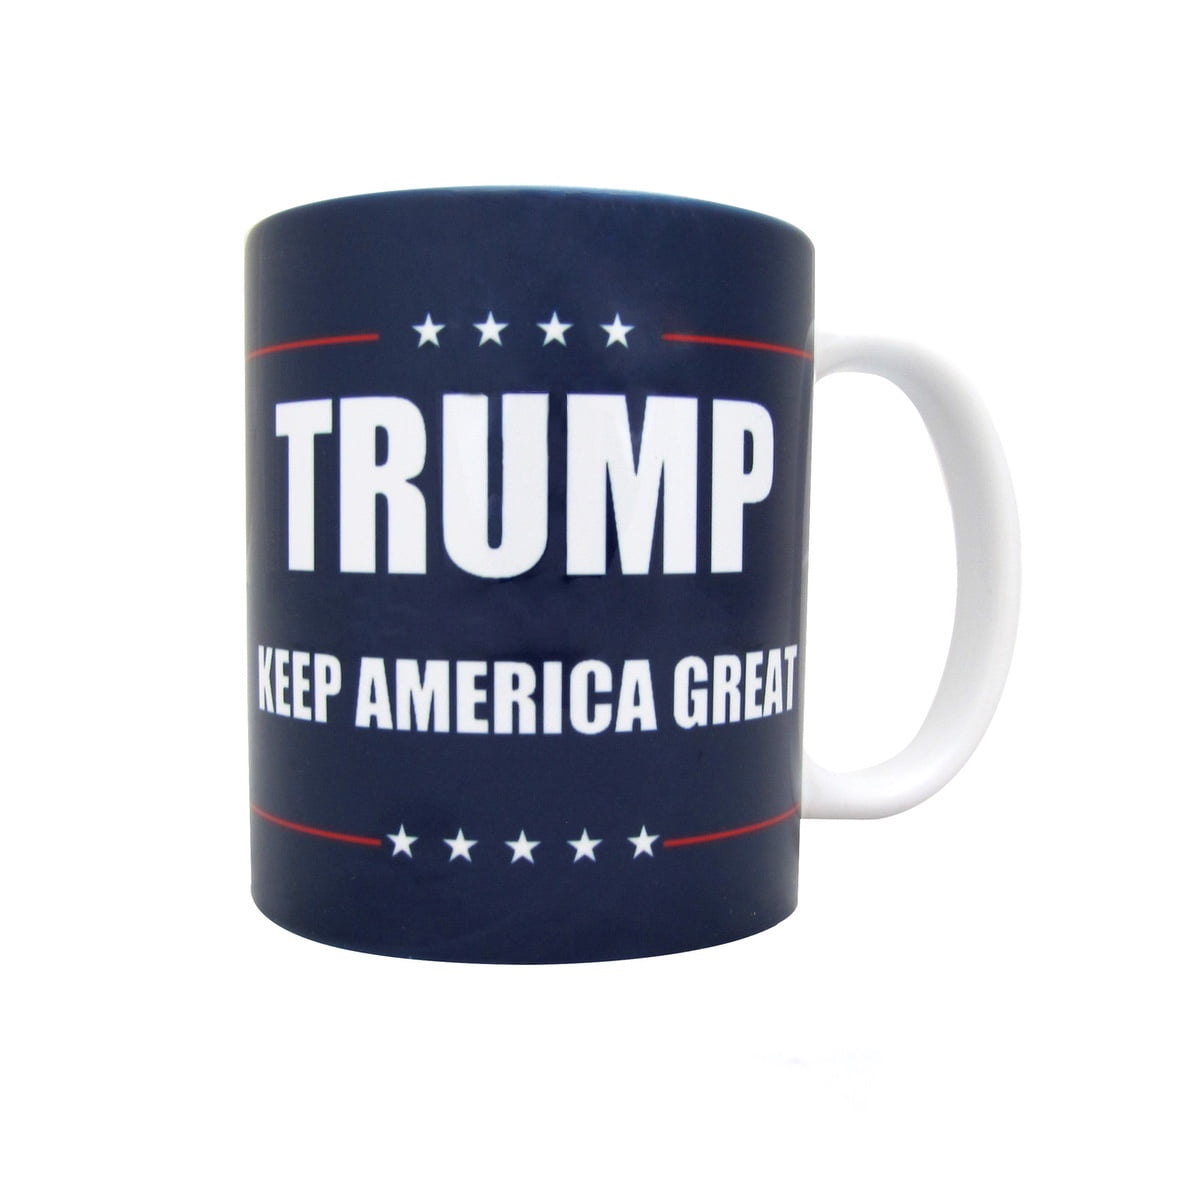 DONALD TRUMP Keep America Great 2020 Coffee Mug #2 POTUS 